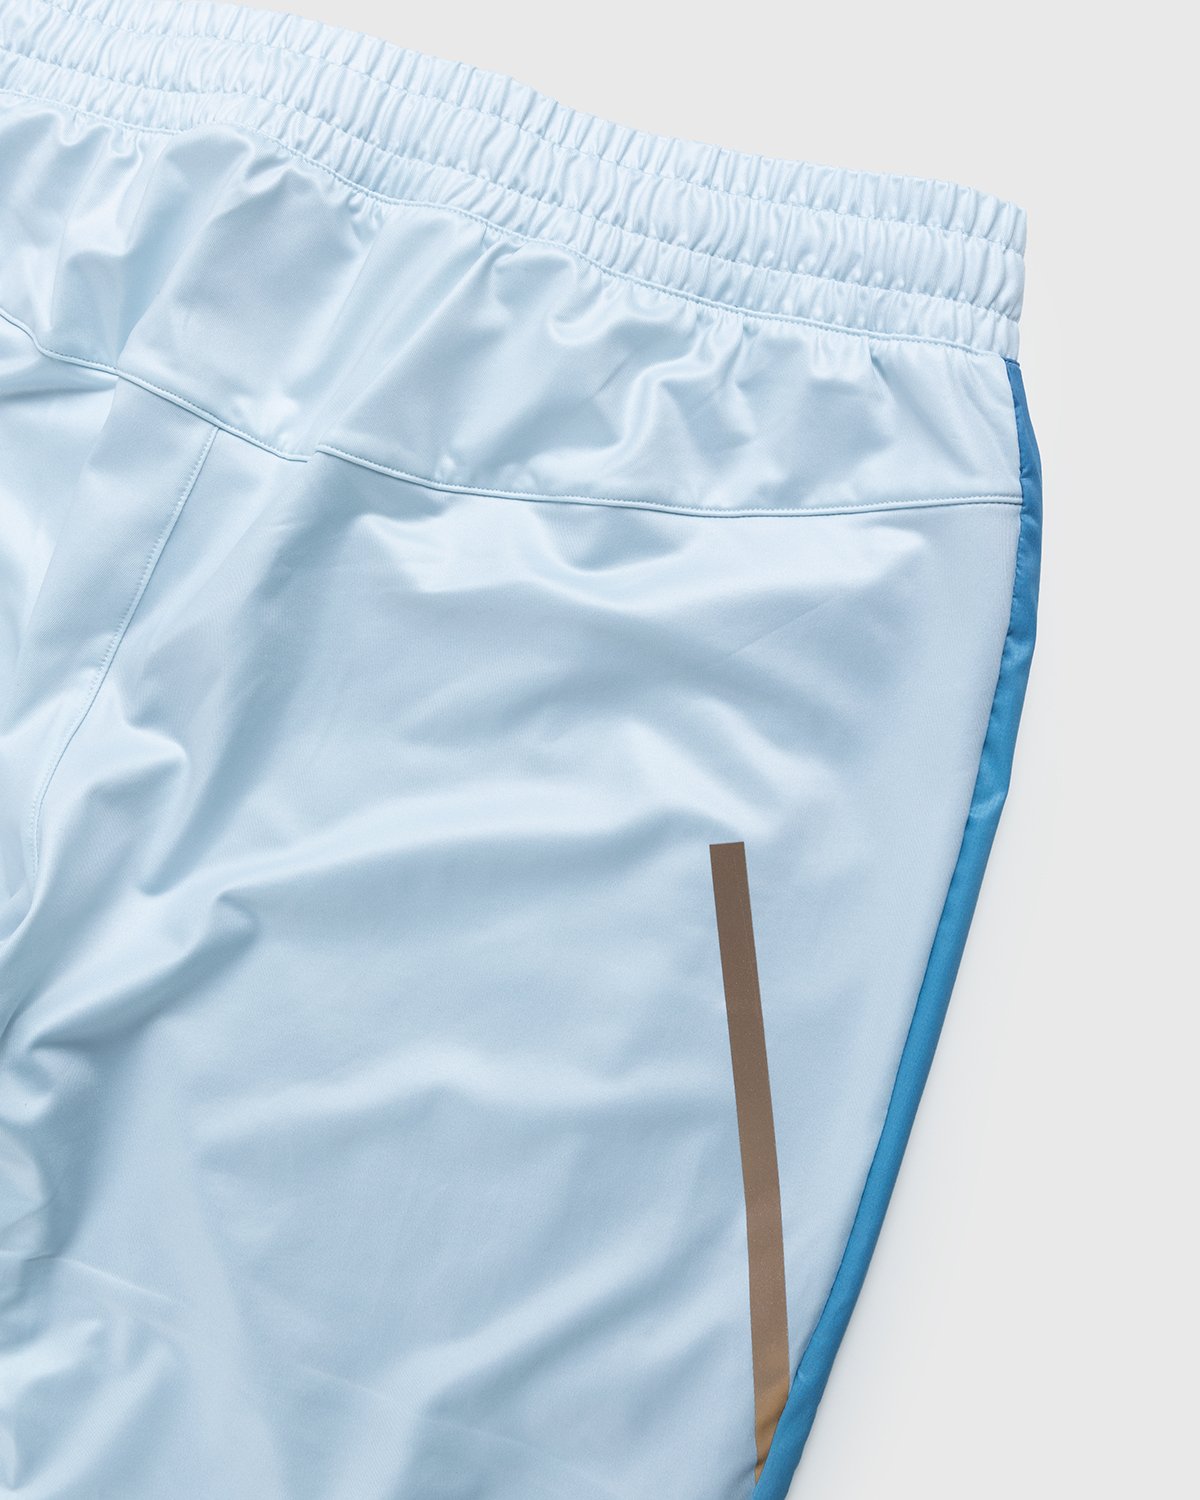 Loewe x On - Men's Technical Running Pants Gradient Grey - Clothing - Blue - Image 4